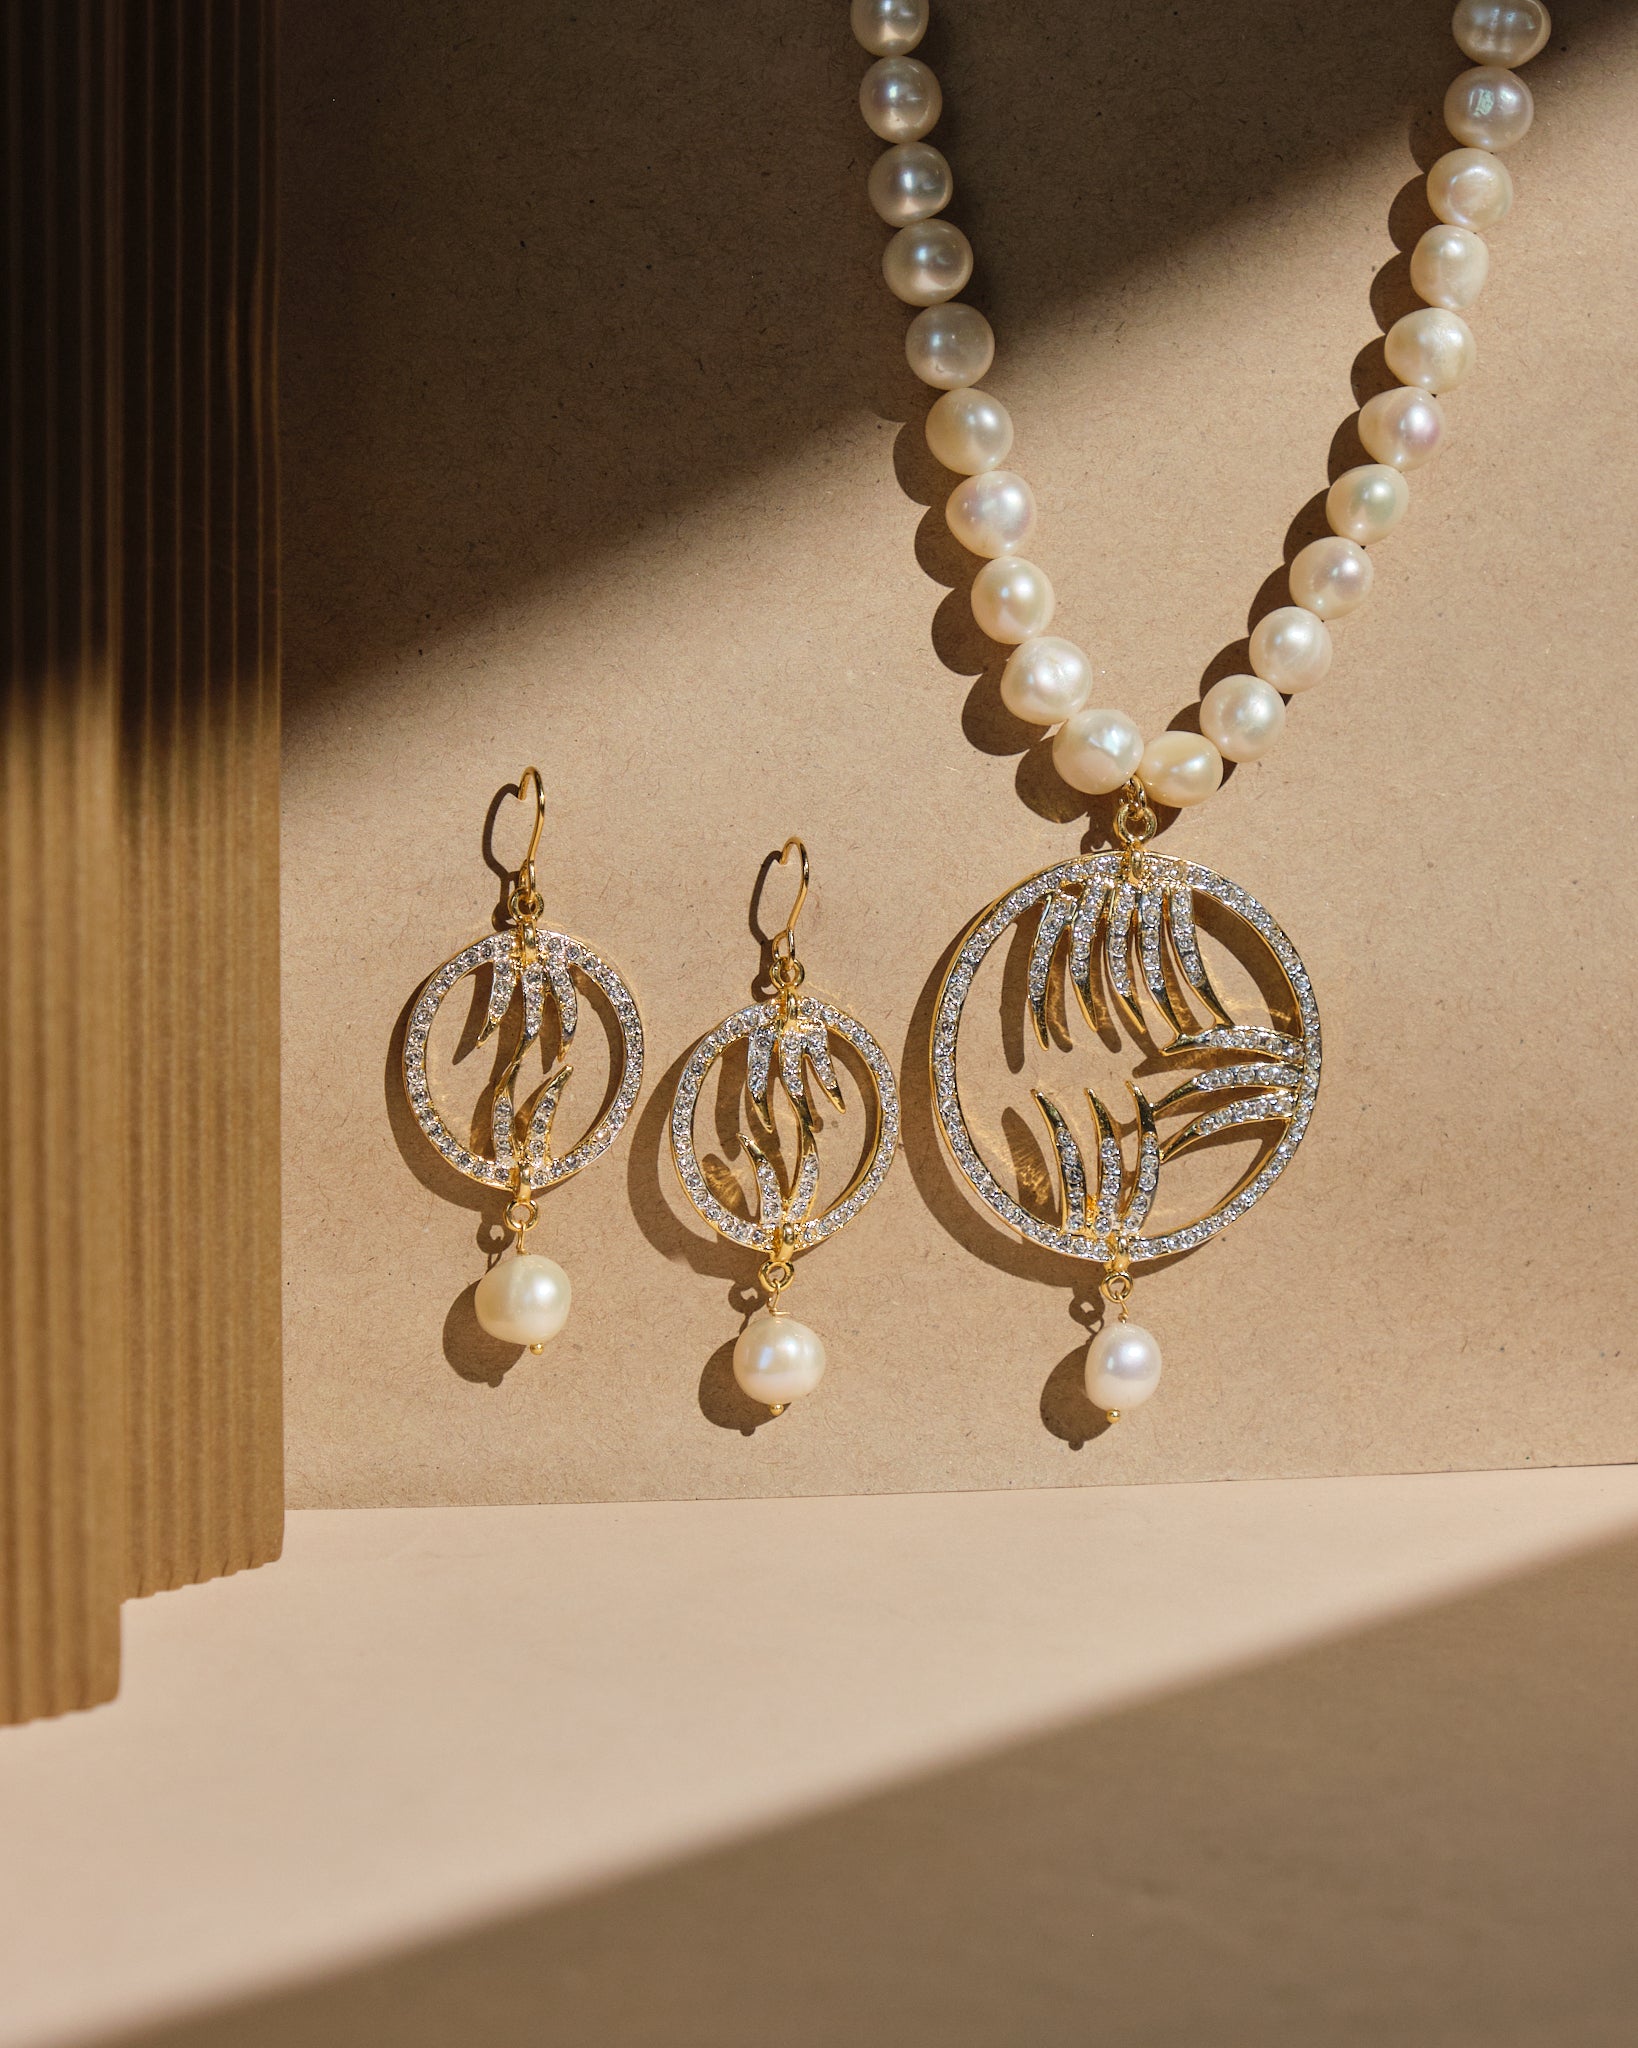 The Maniranjani Delightening Pearl Necklace Set